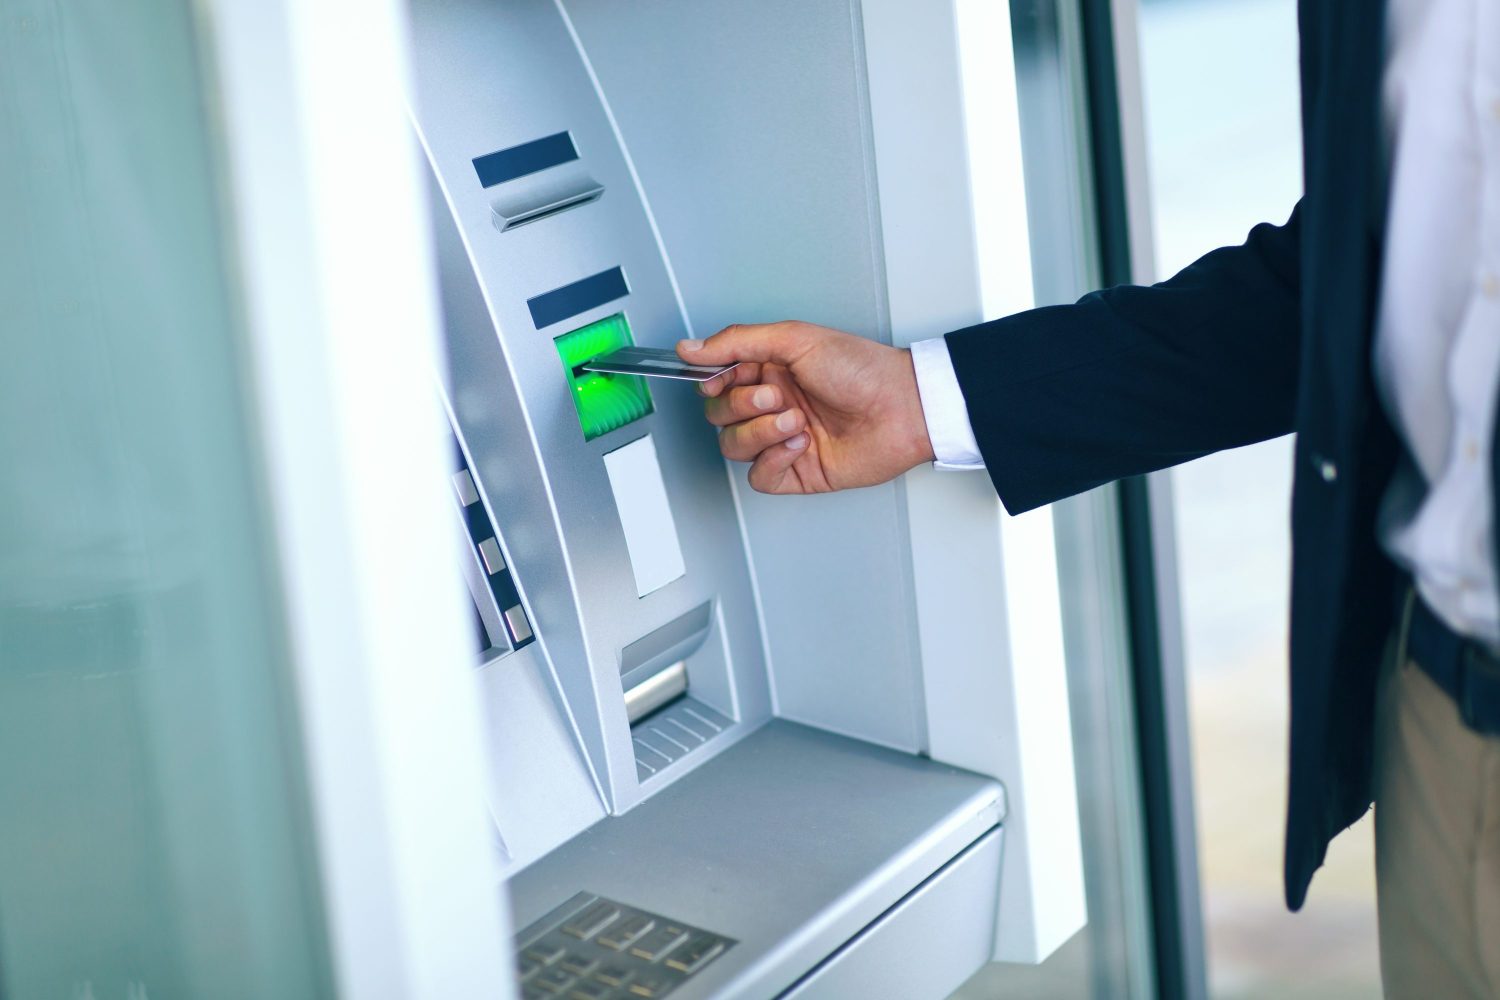 Person using an ATM machine.